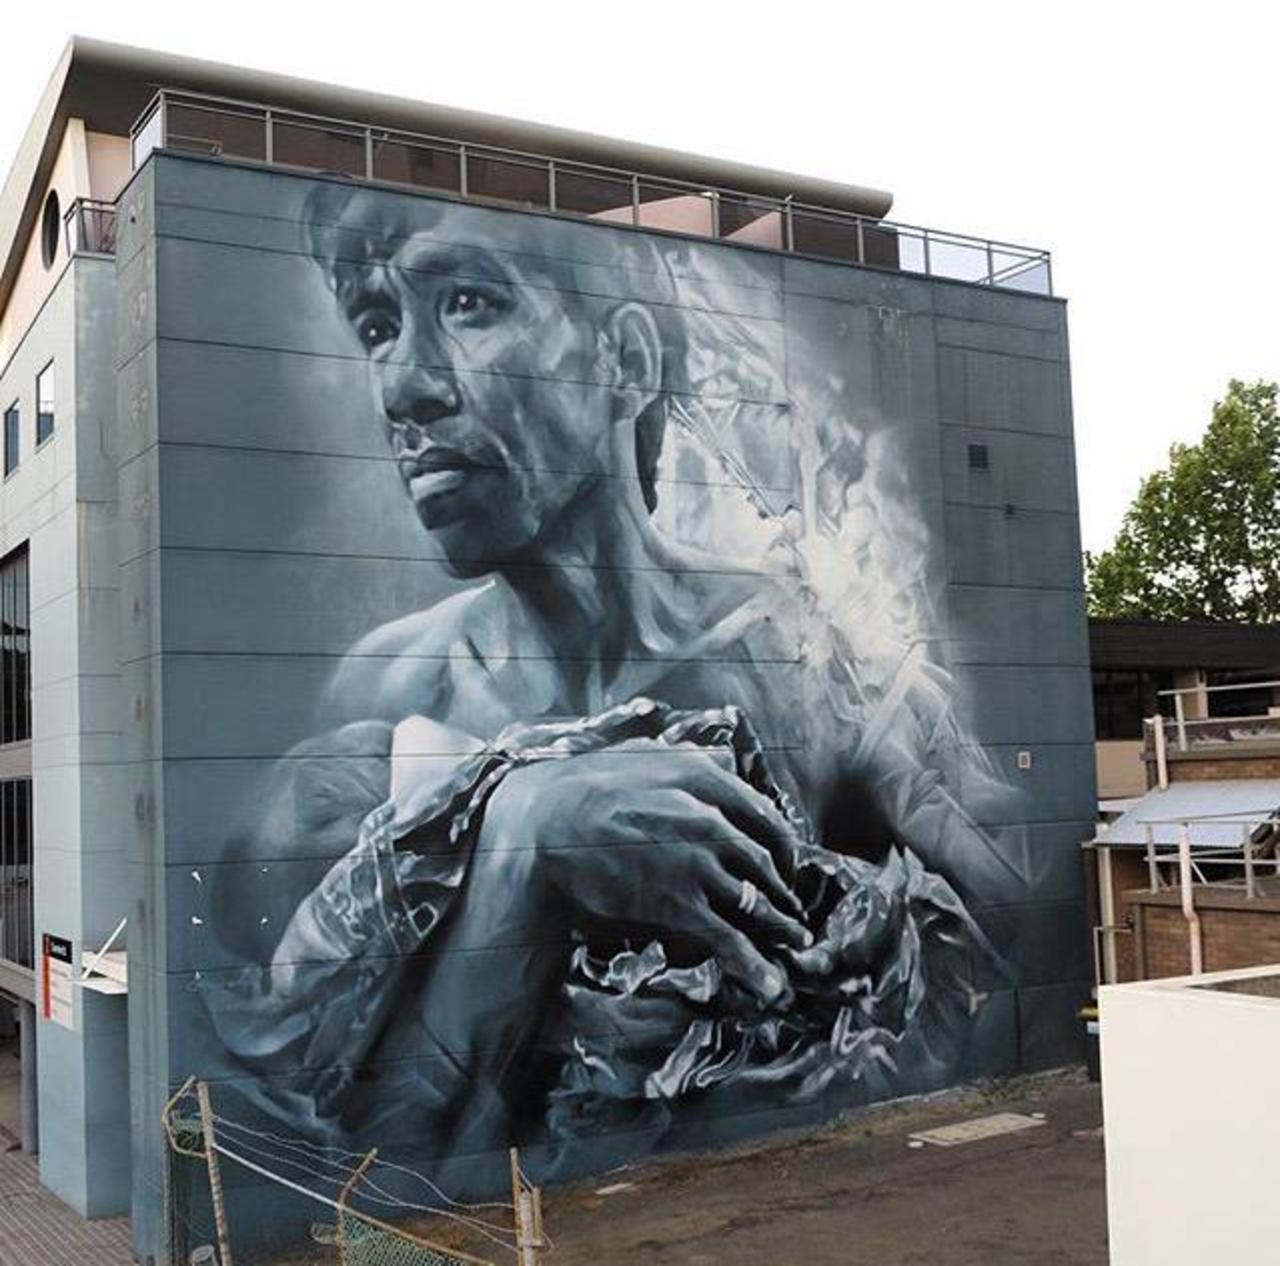 New Street Art by Guido Van Helten in Wollongong Australia 

#art #graffiti #mural #streetart http://t.co/HR3Dopi3qW